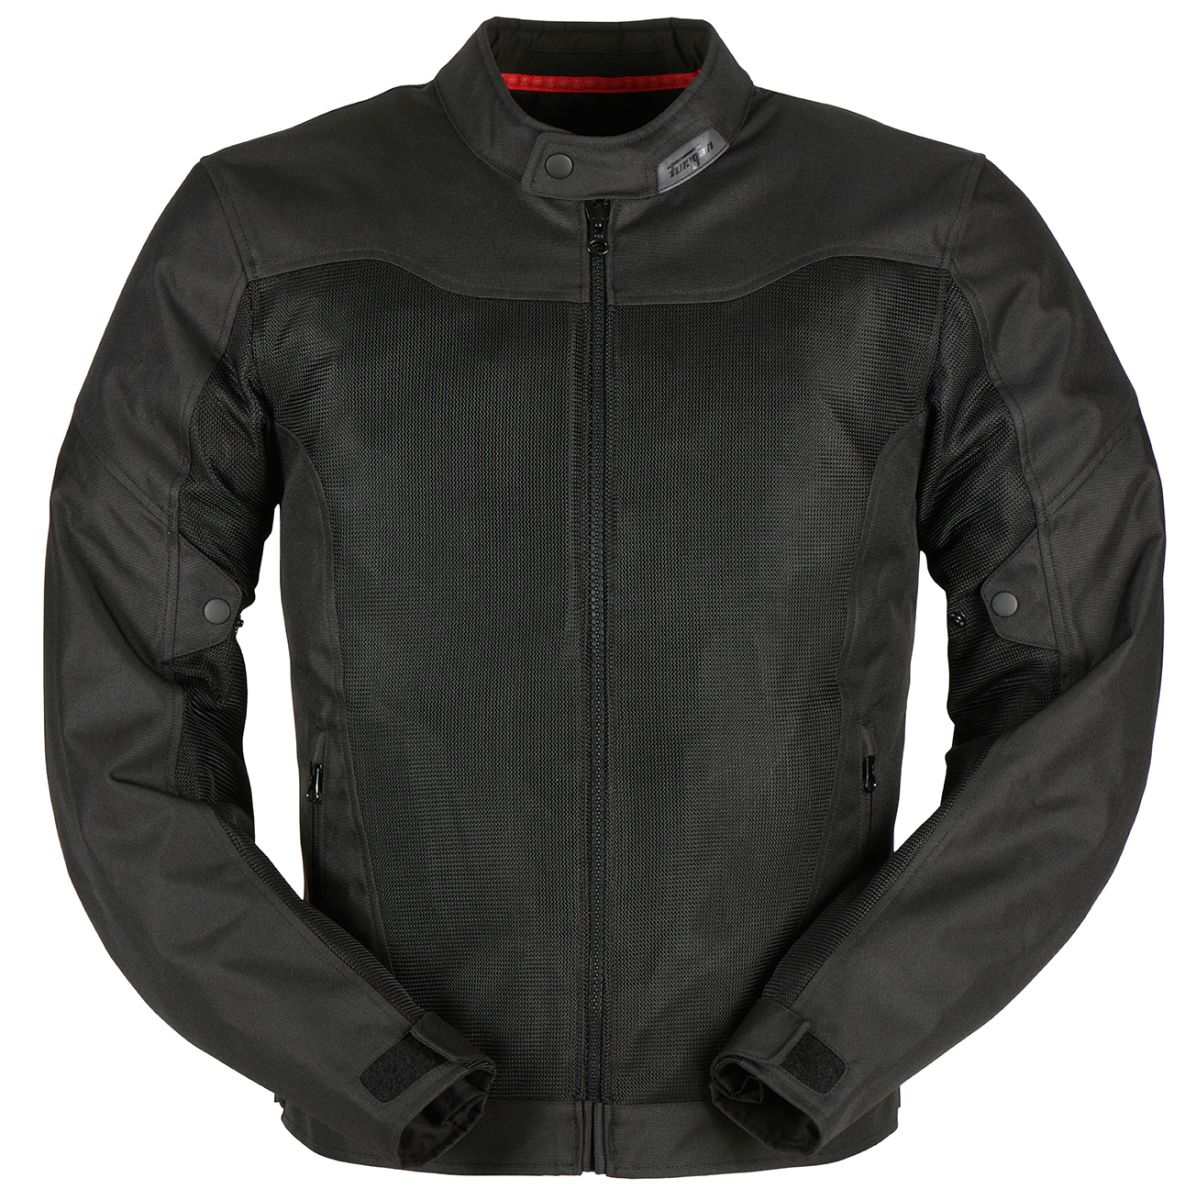 Image of Furygan Mistral 3 Evo Jacket Black Size 2XL EN